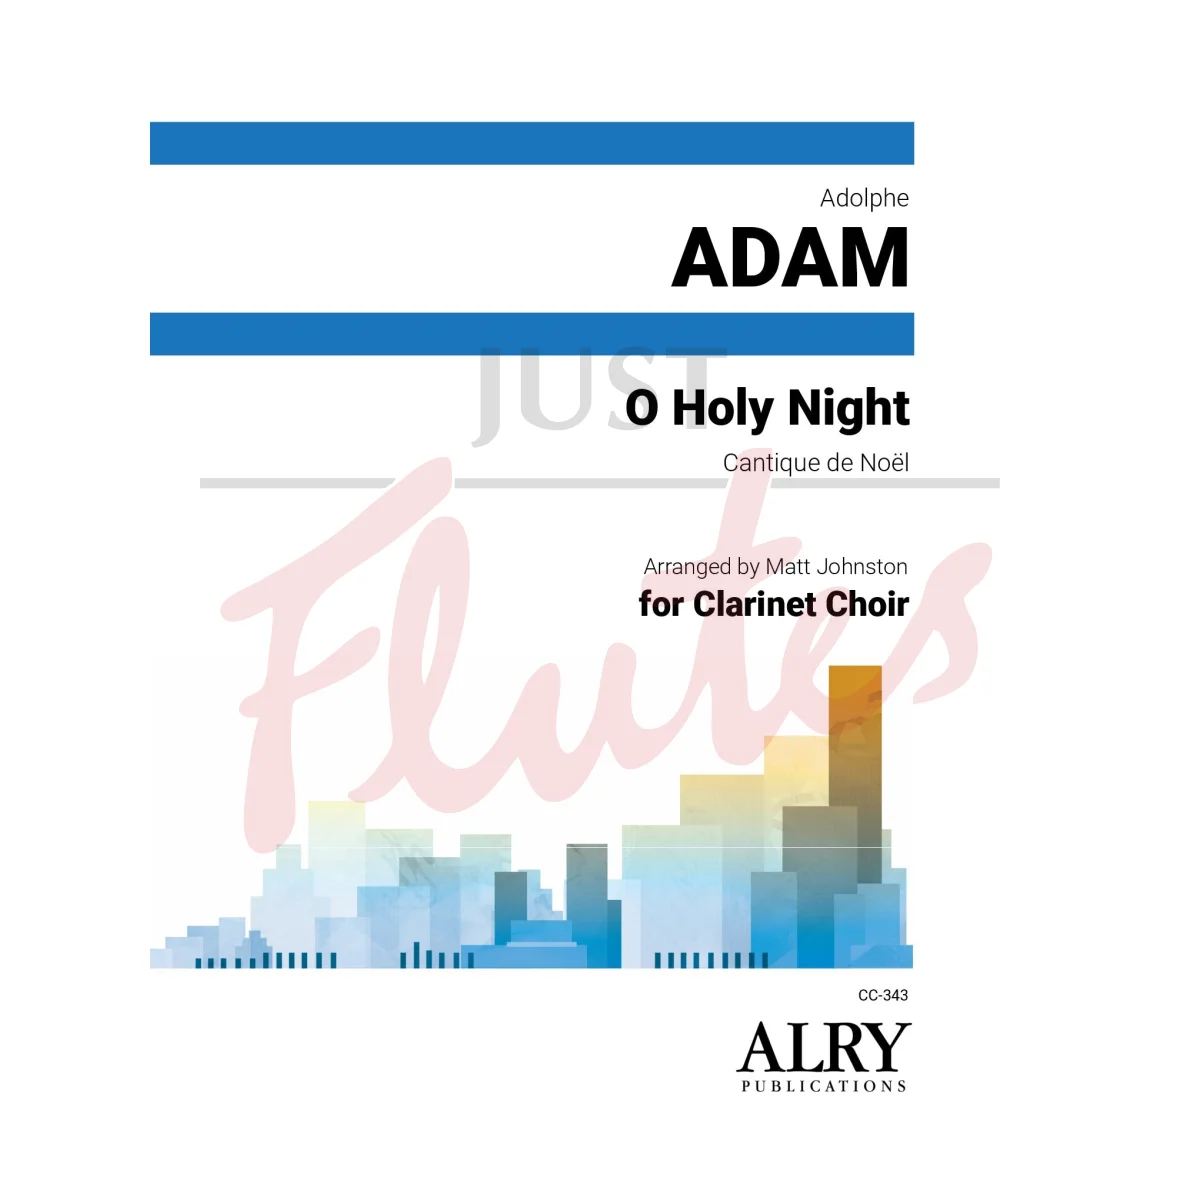 O Holy Night for Clarinet Choir